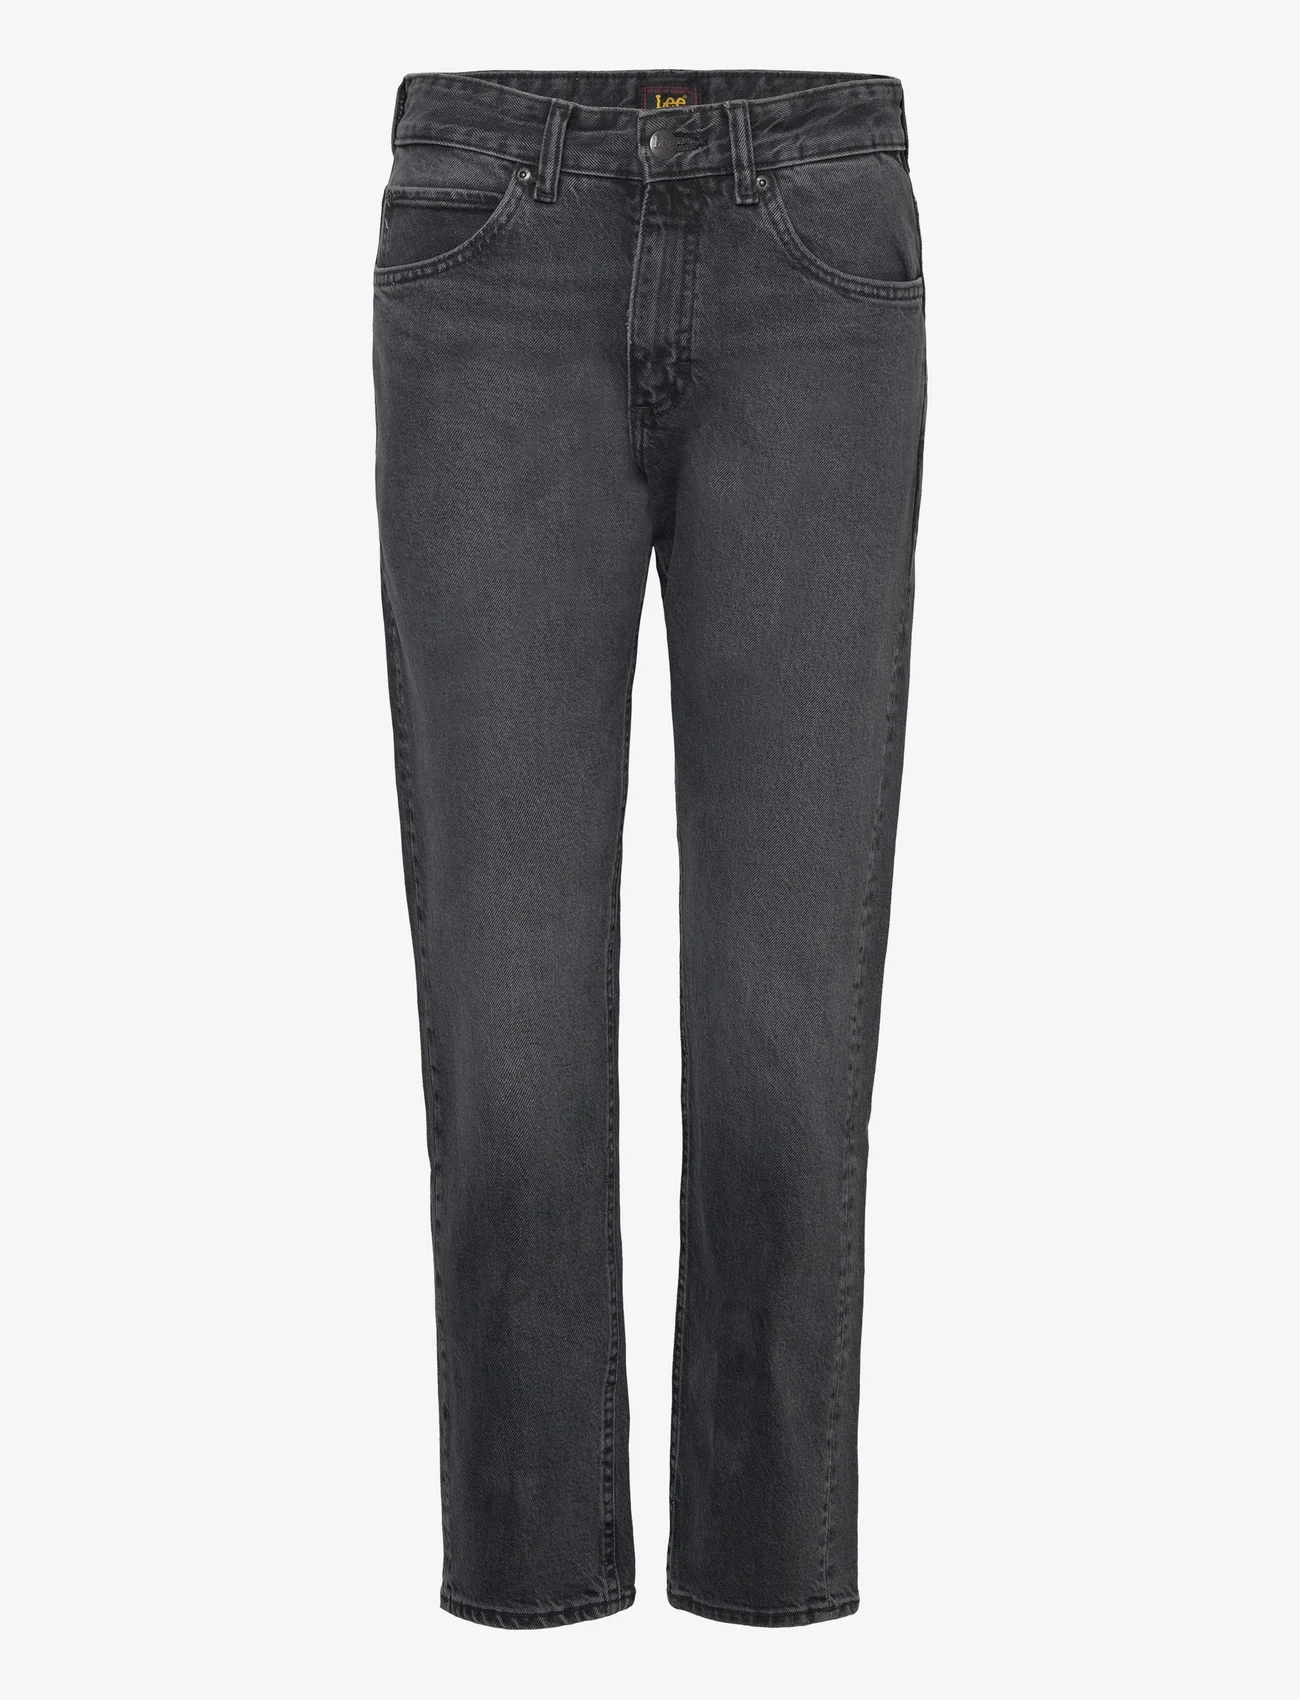 Lee Jeans - RIDER JEANS - džinsi - refined black - 0